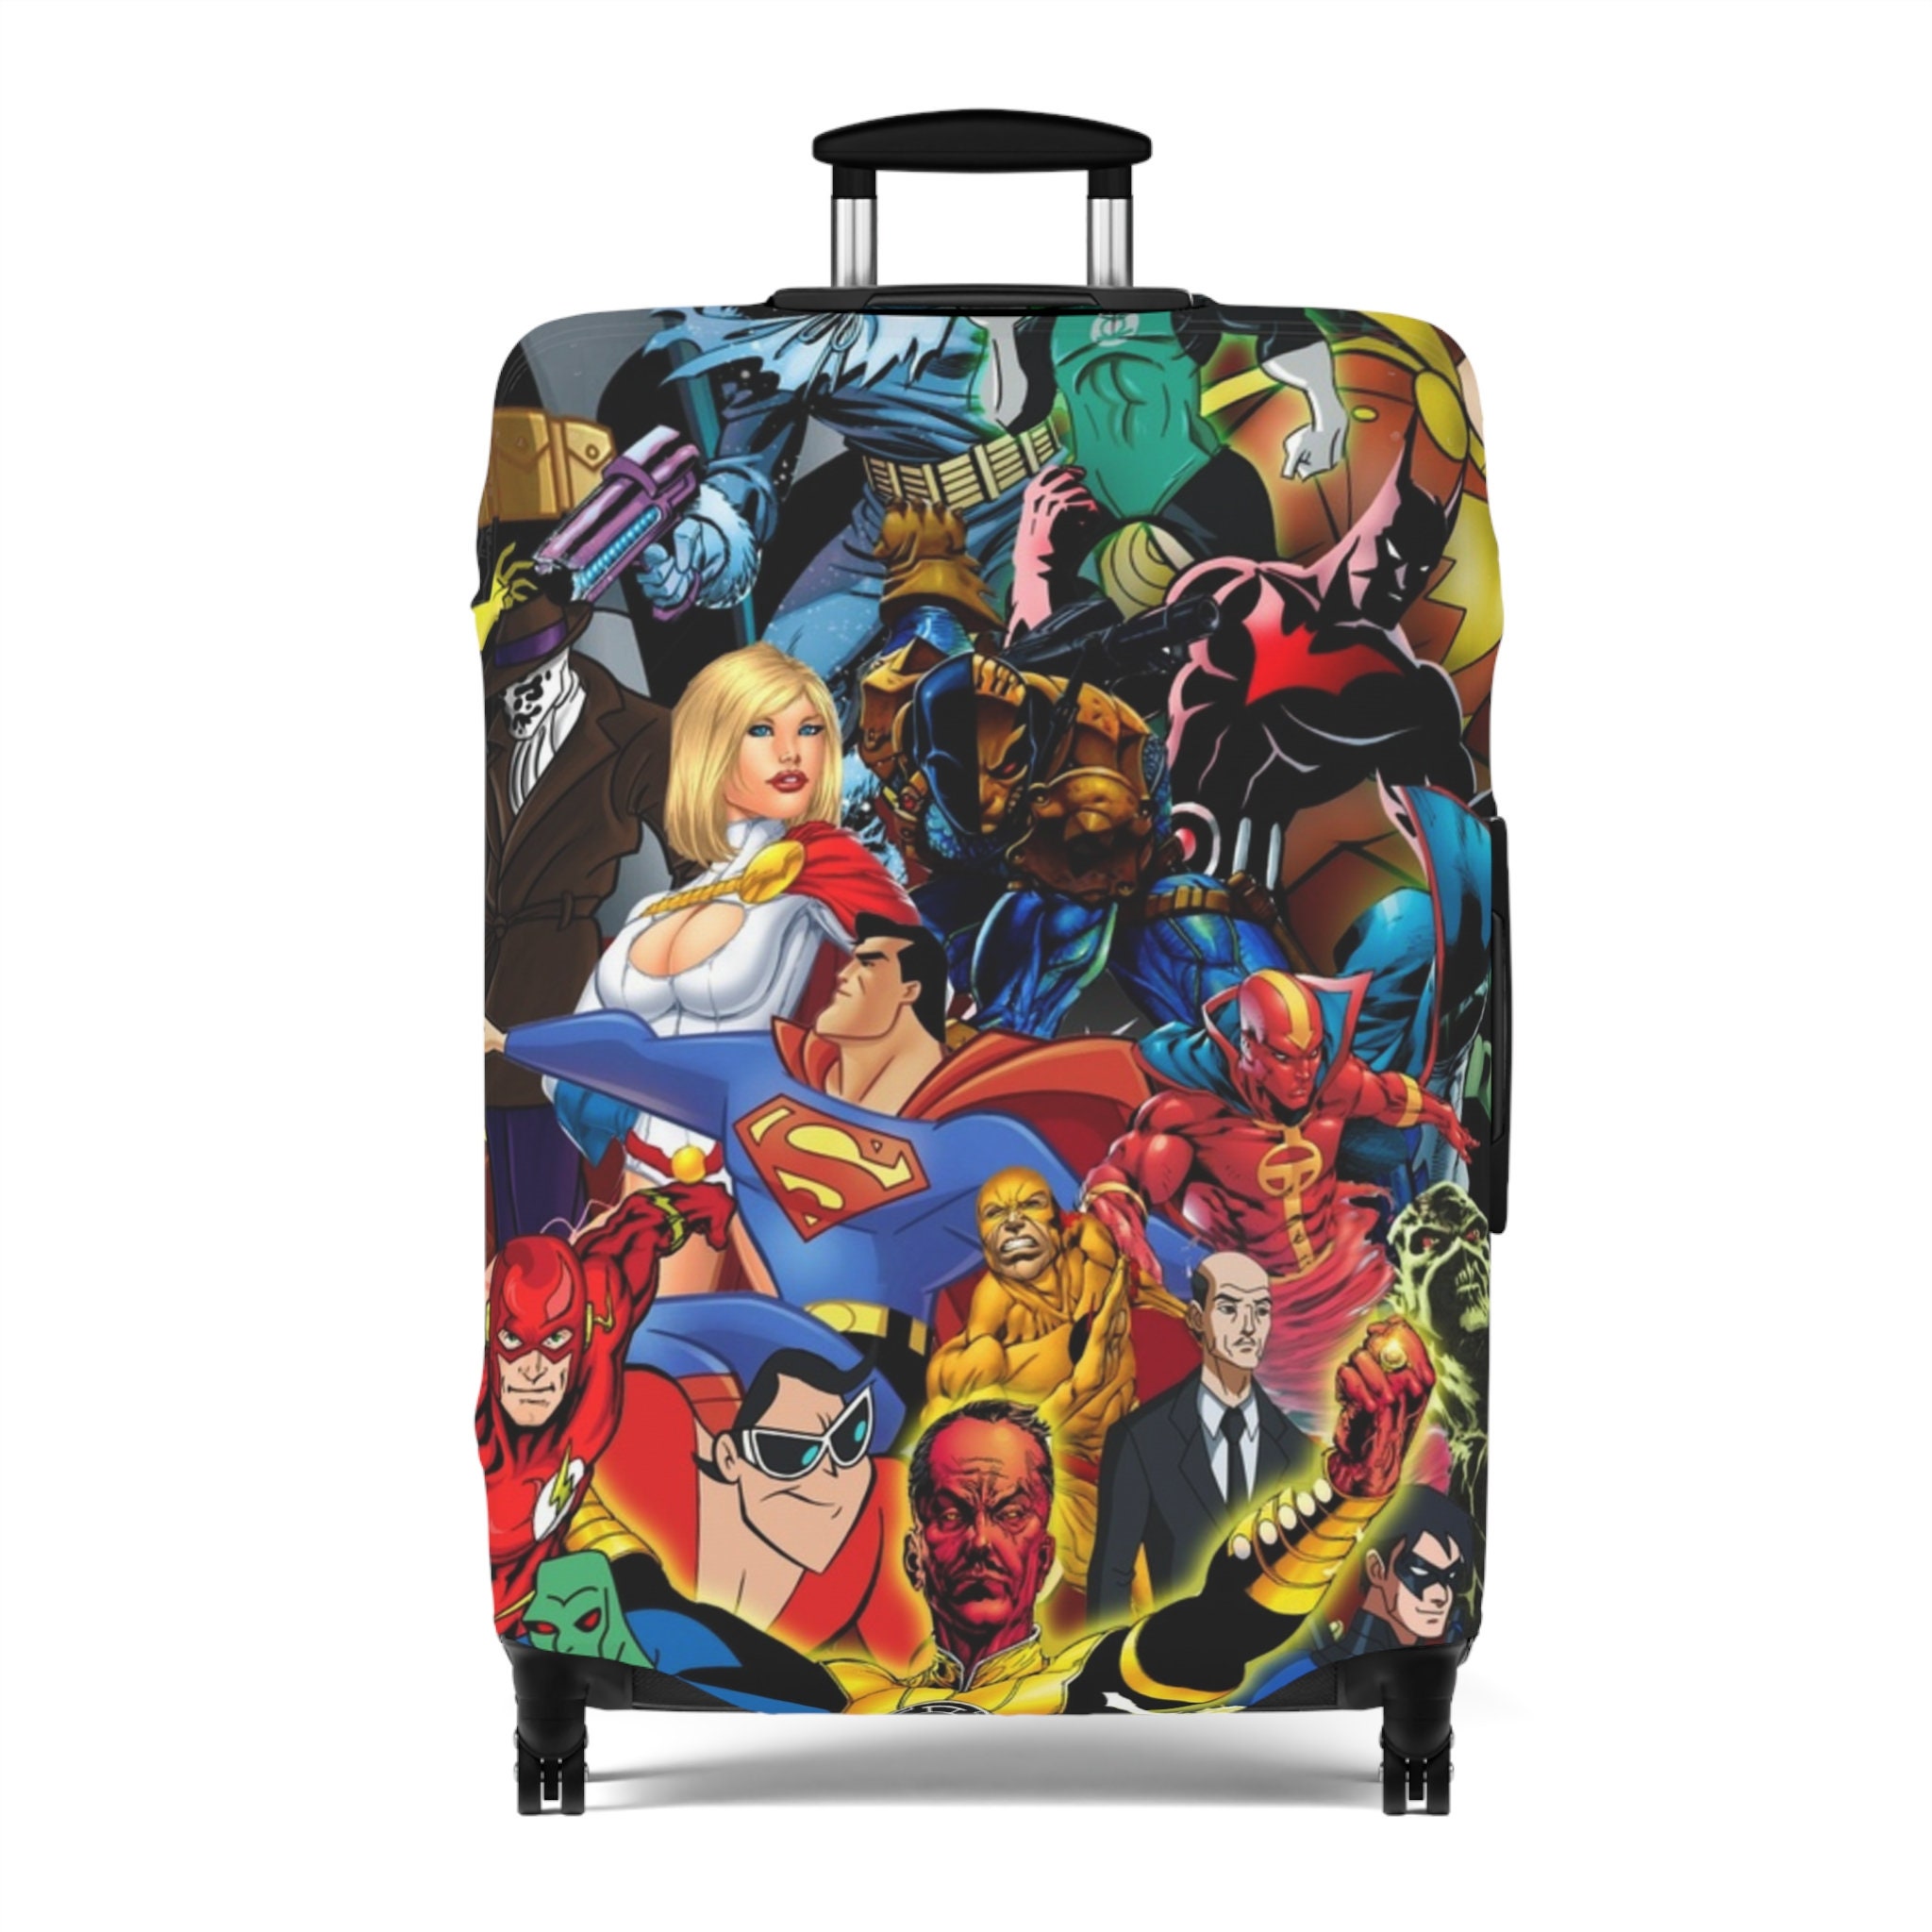 Discover スーパーヒーロー スーツケースカバー アニメーション映画 可愛い旅行ギフト